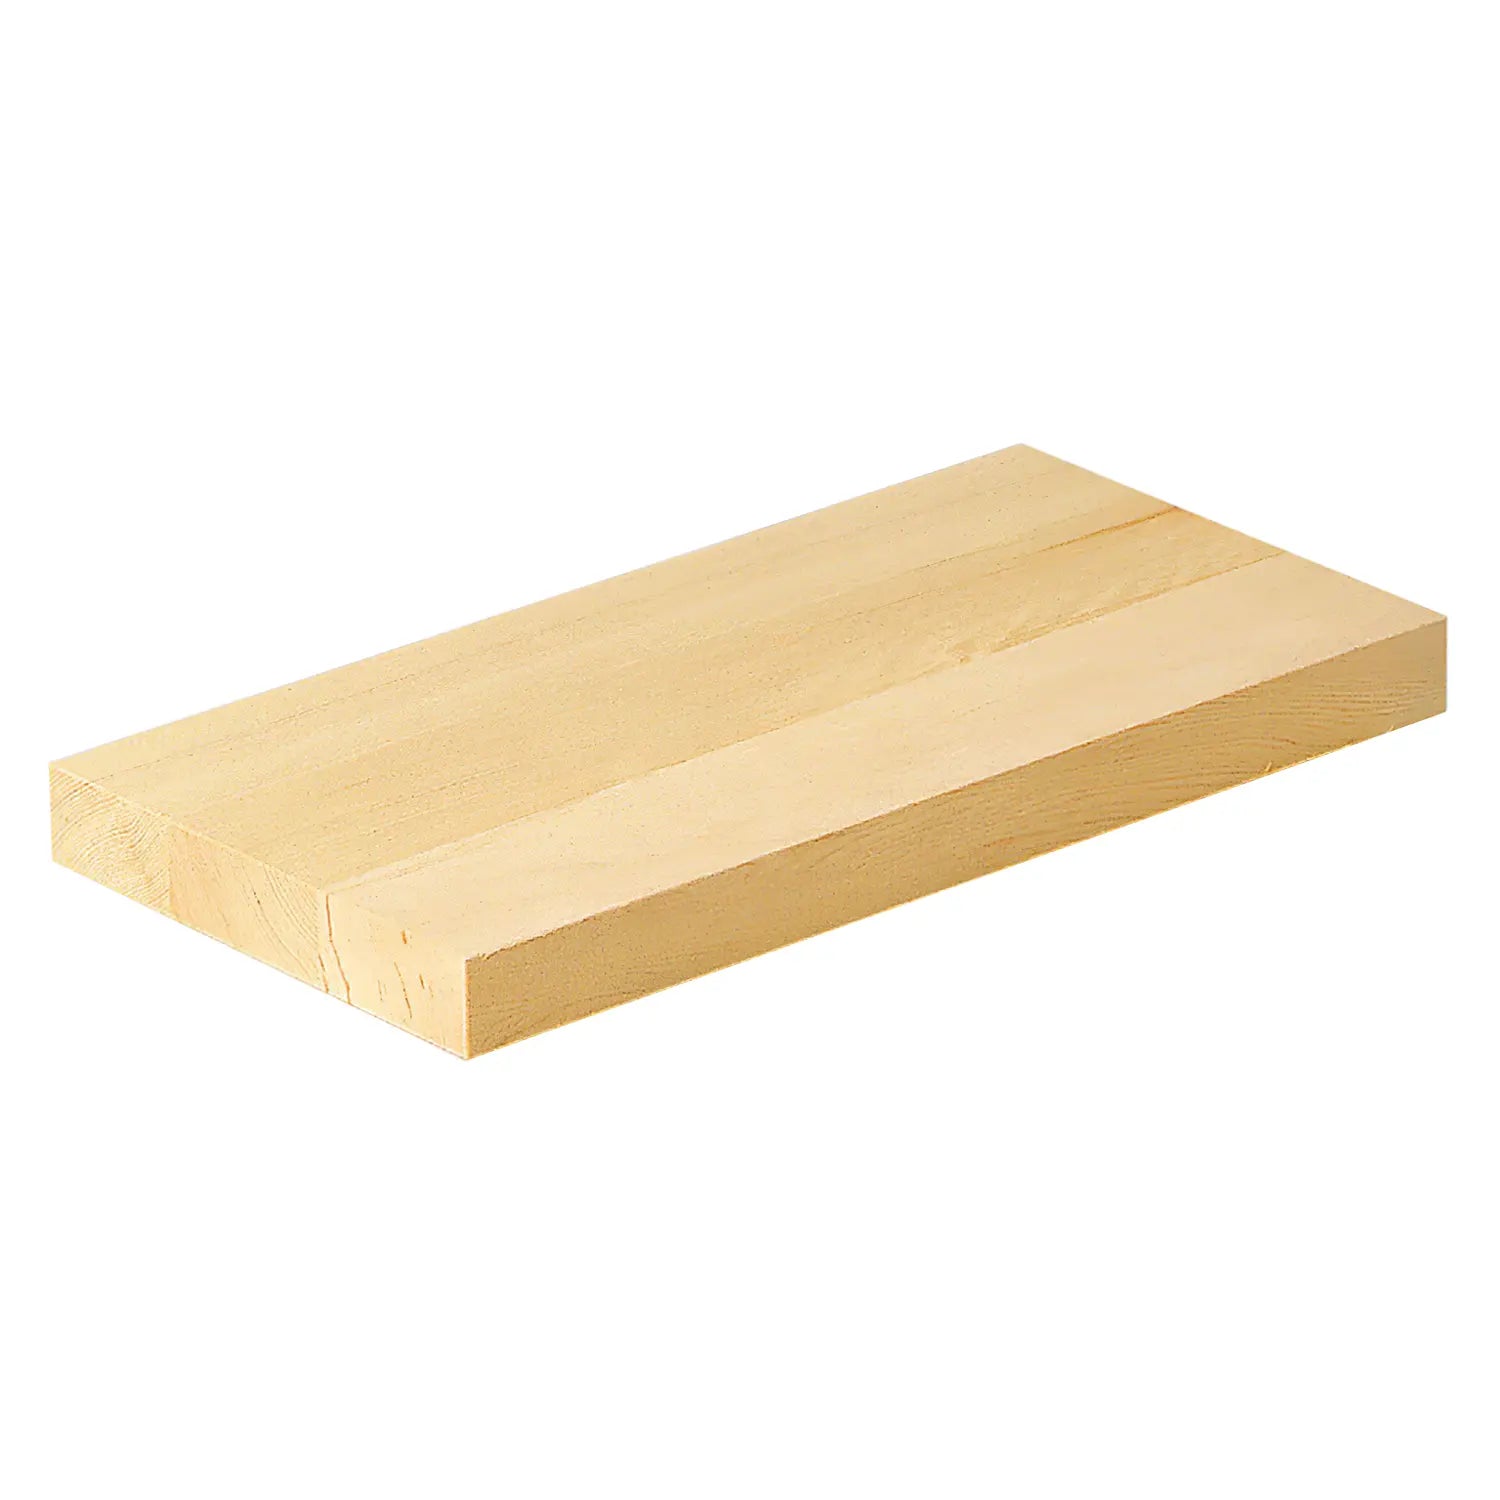 Endo Shoji Kiso Hinoki Cypress Wooden Cutting Board 60x33cm - Made in Japan